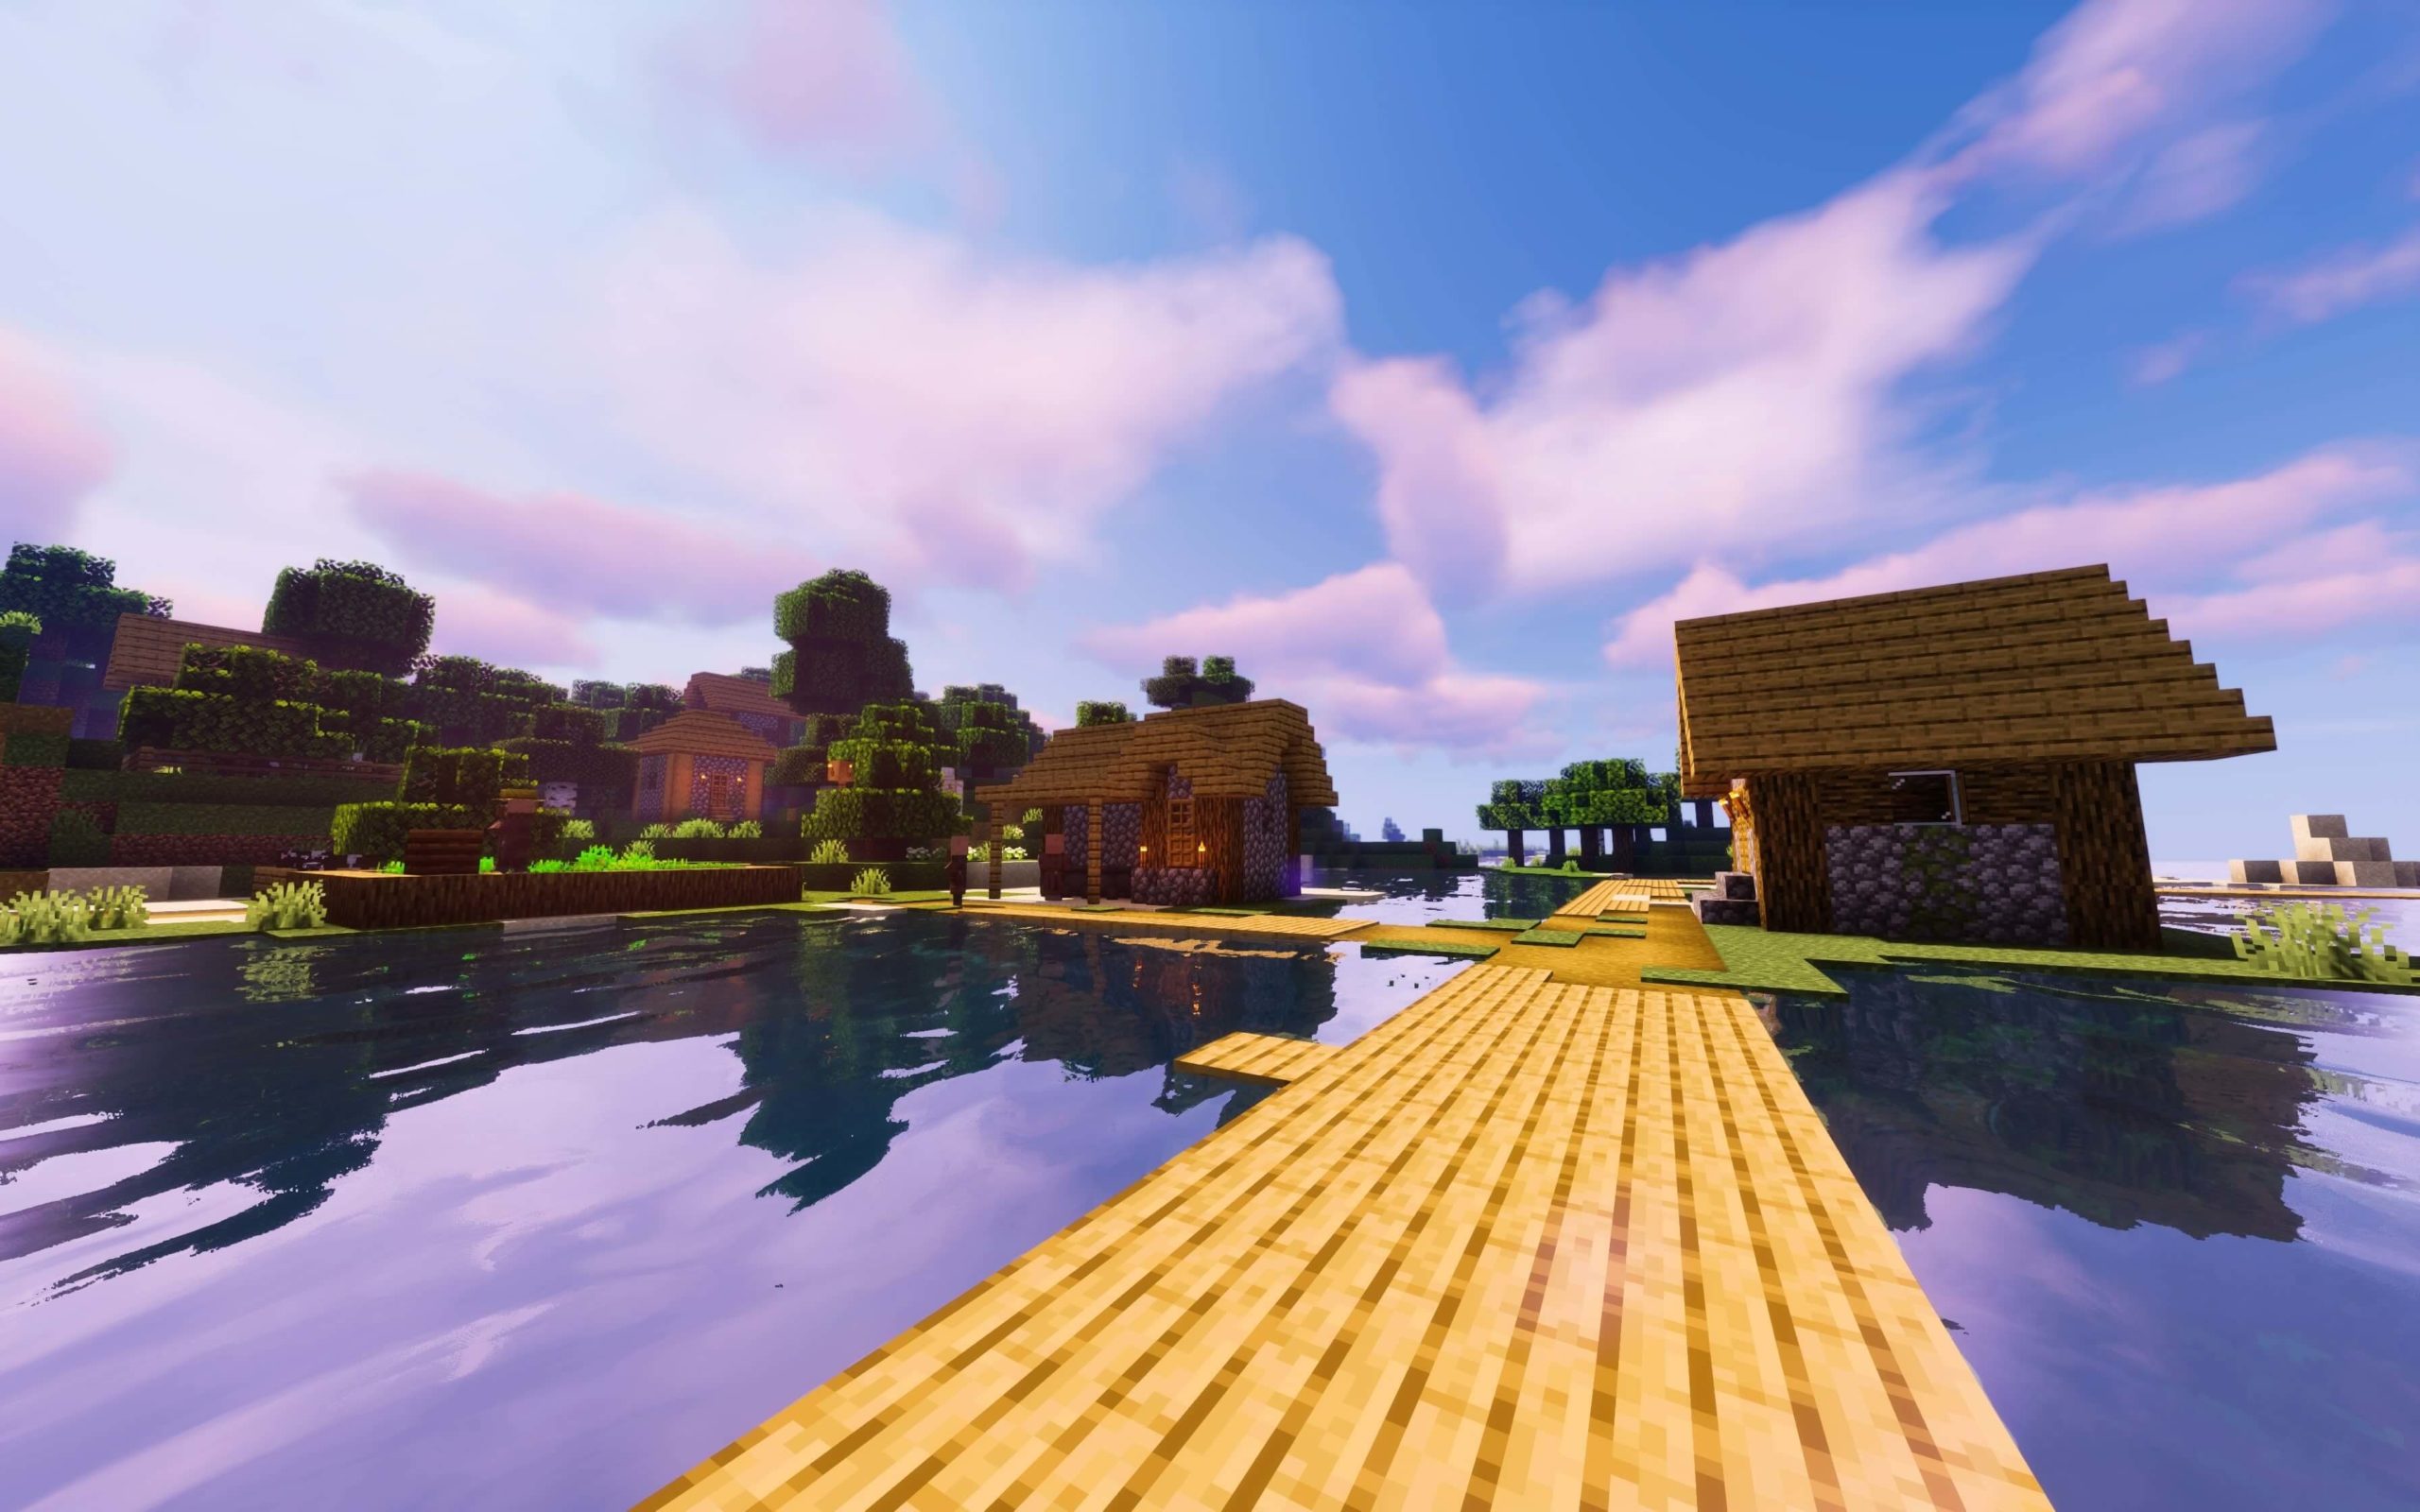 Maritime Minecraft: Gamers construct local landmarks in popular